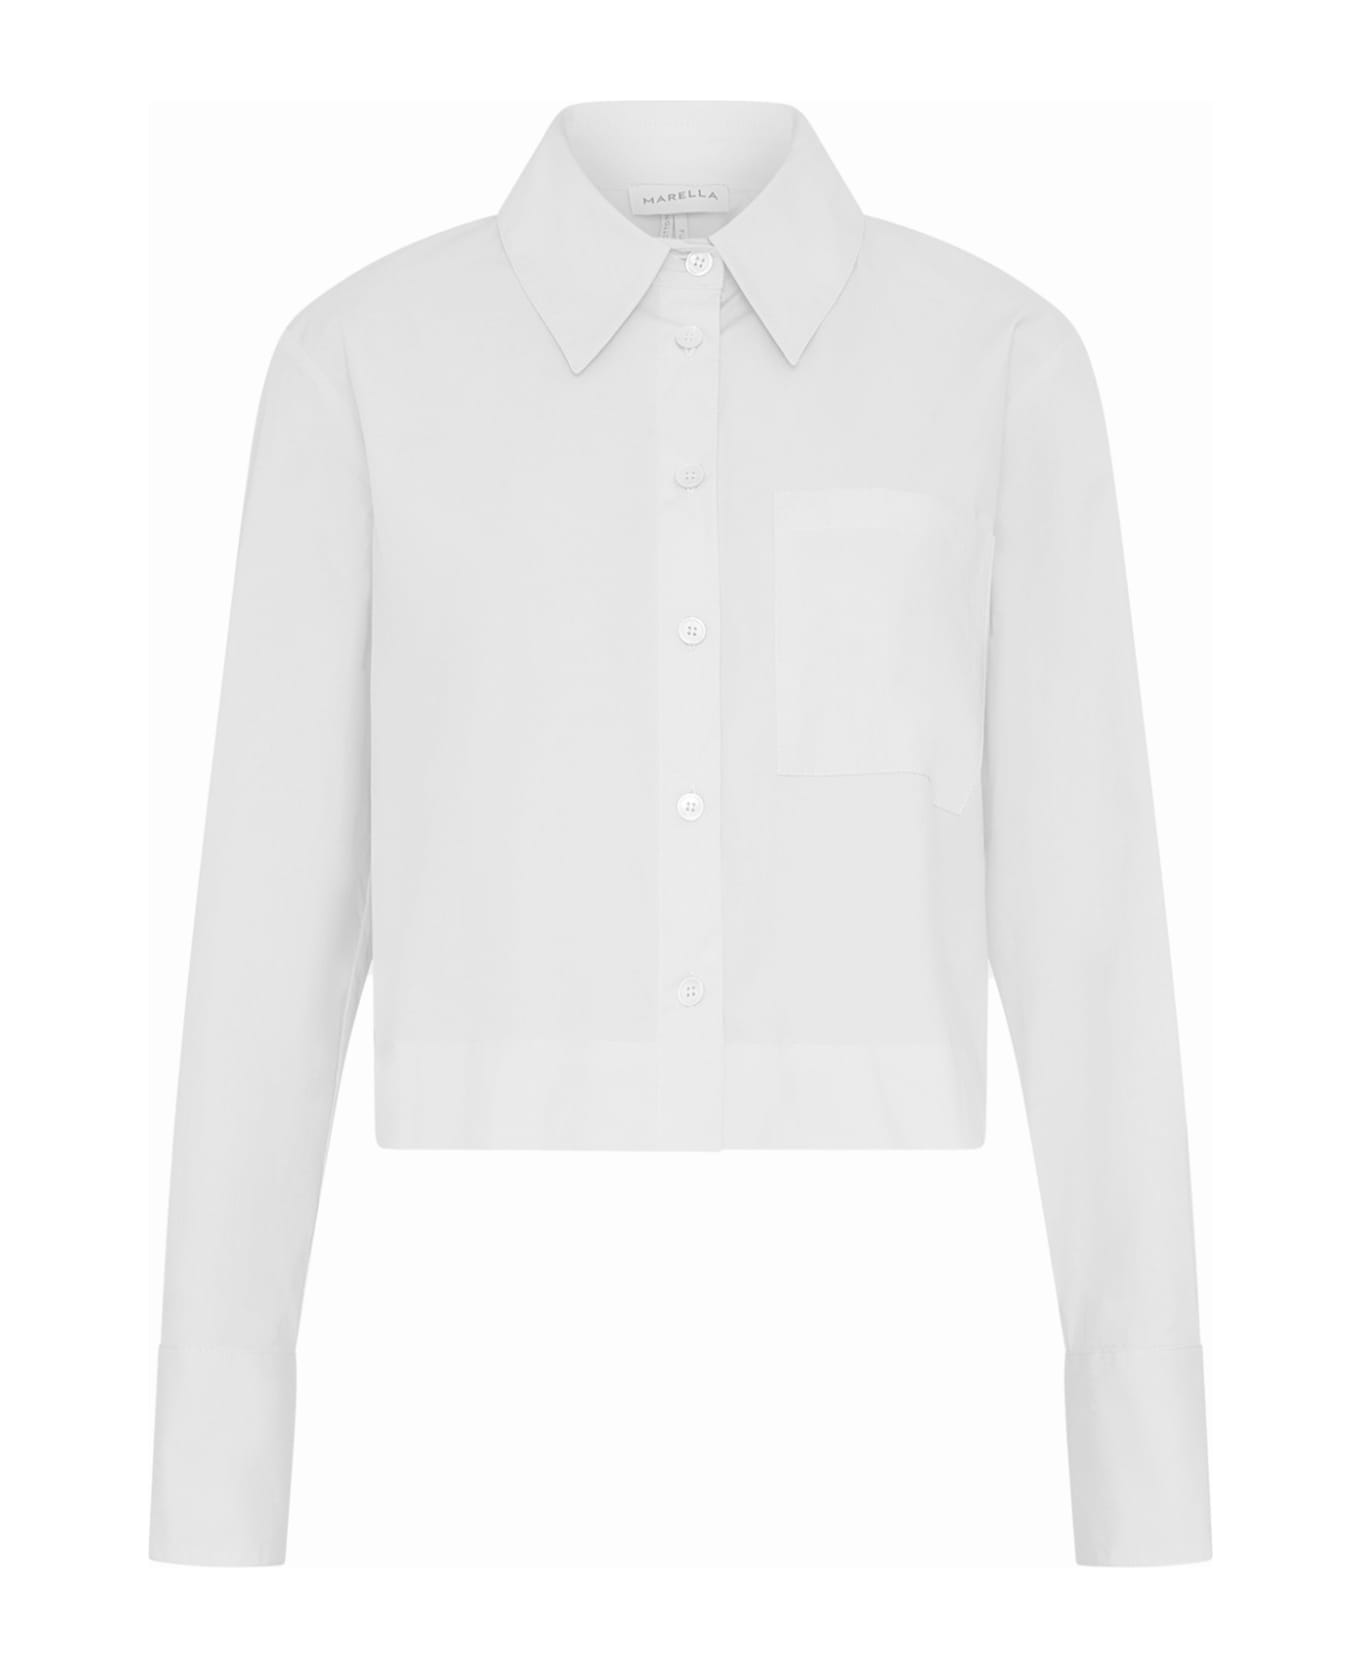 Marella White Long-sleeved Shirt - BIANCO シャツ